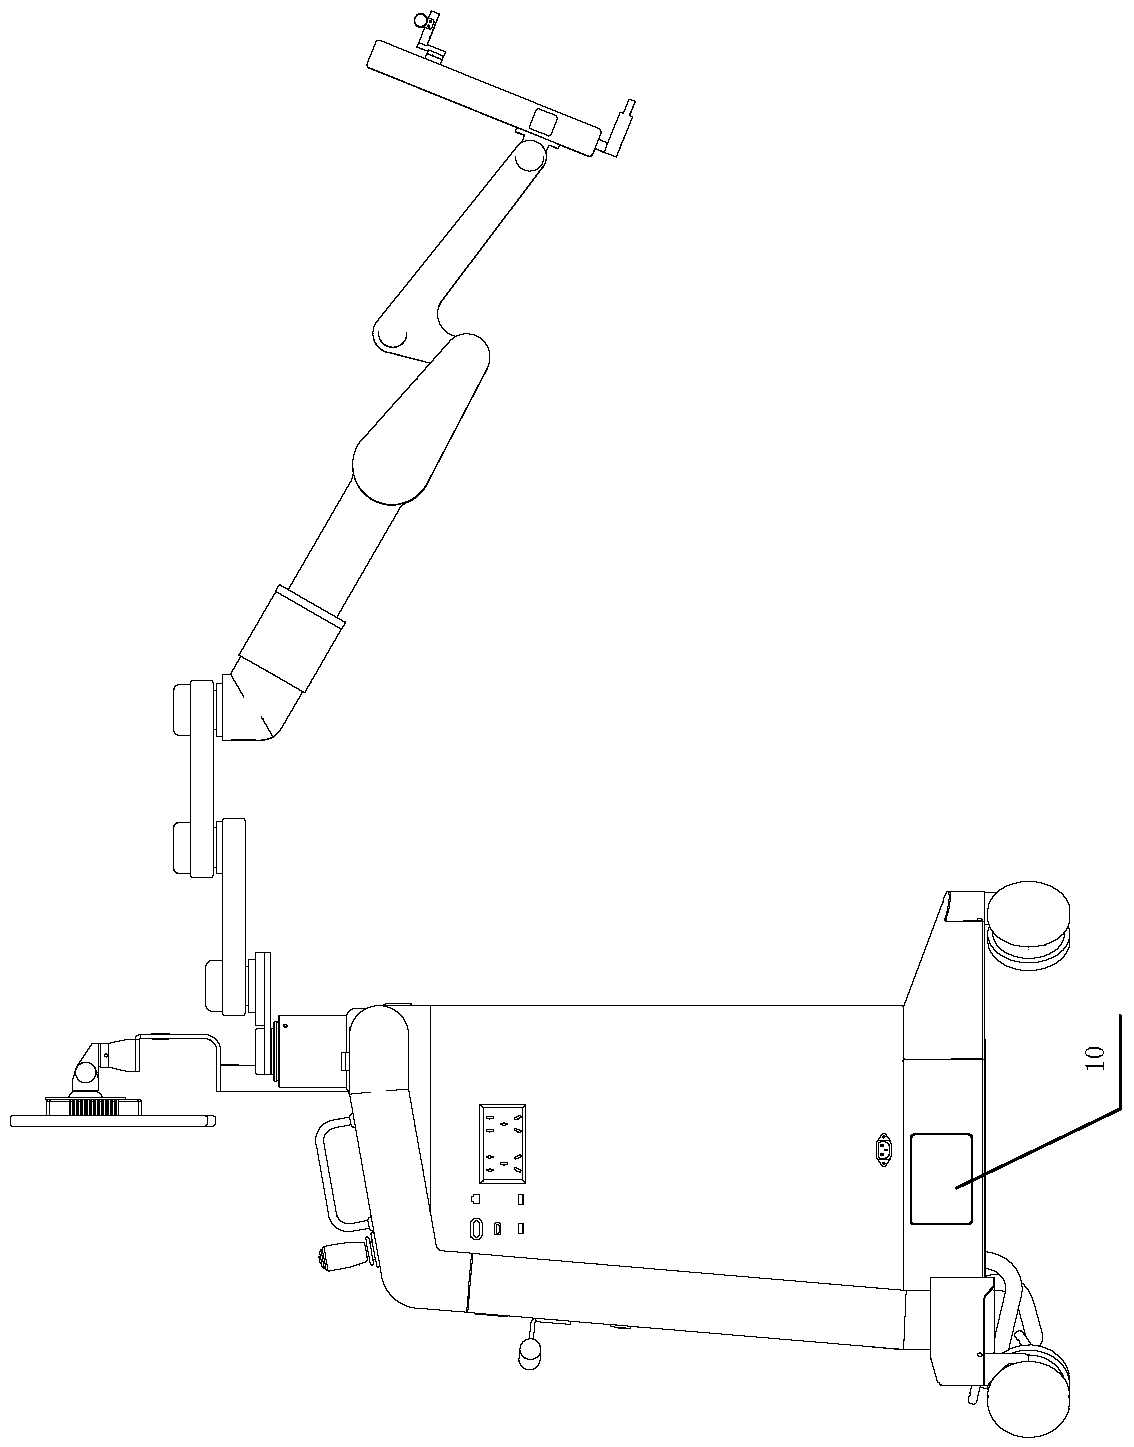 Endoscope surgery robot system